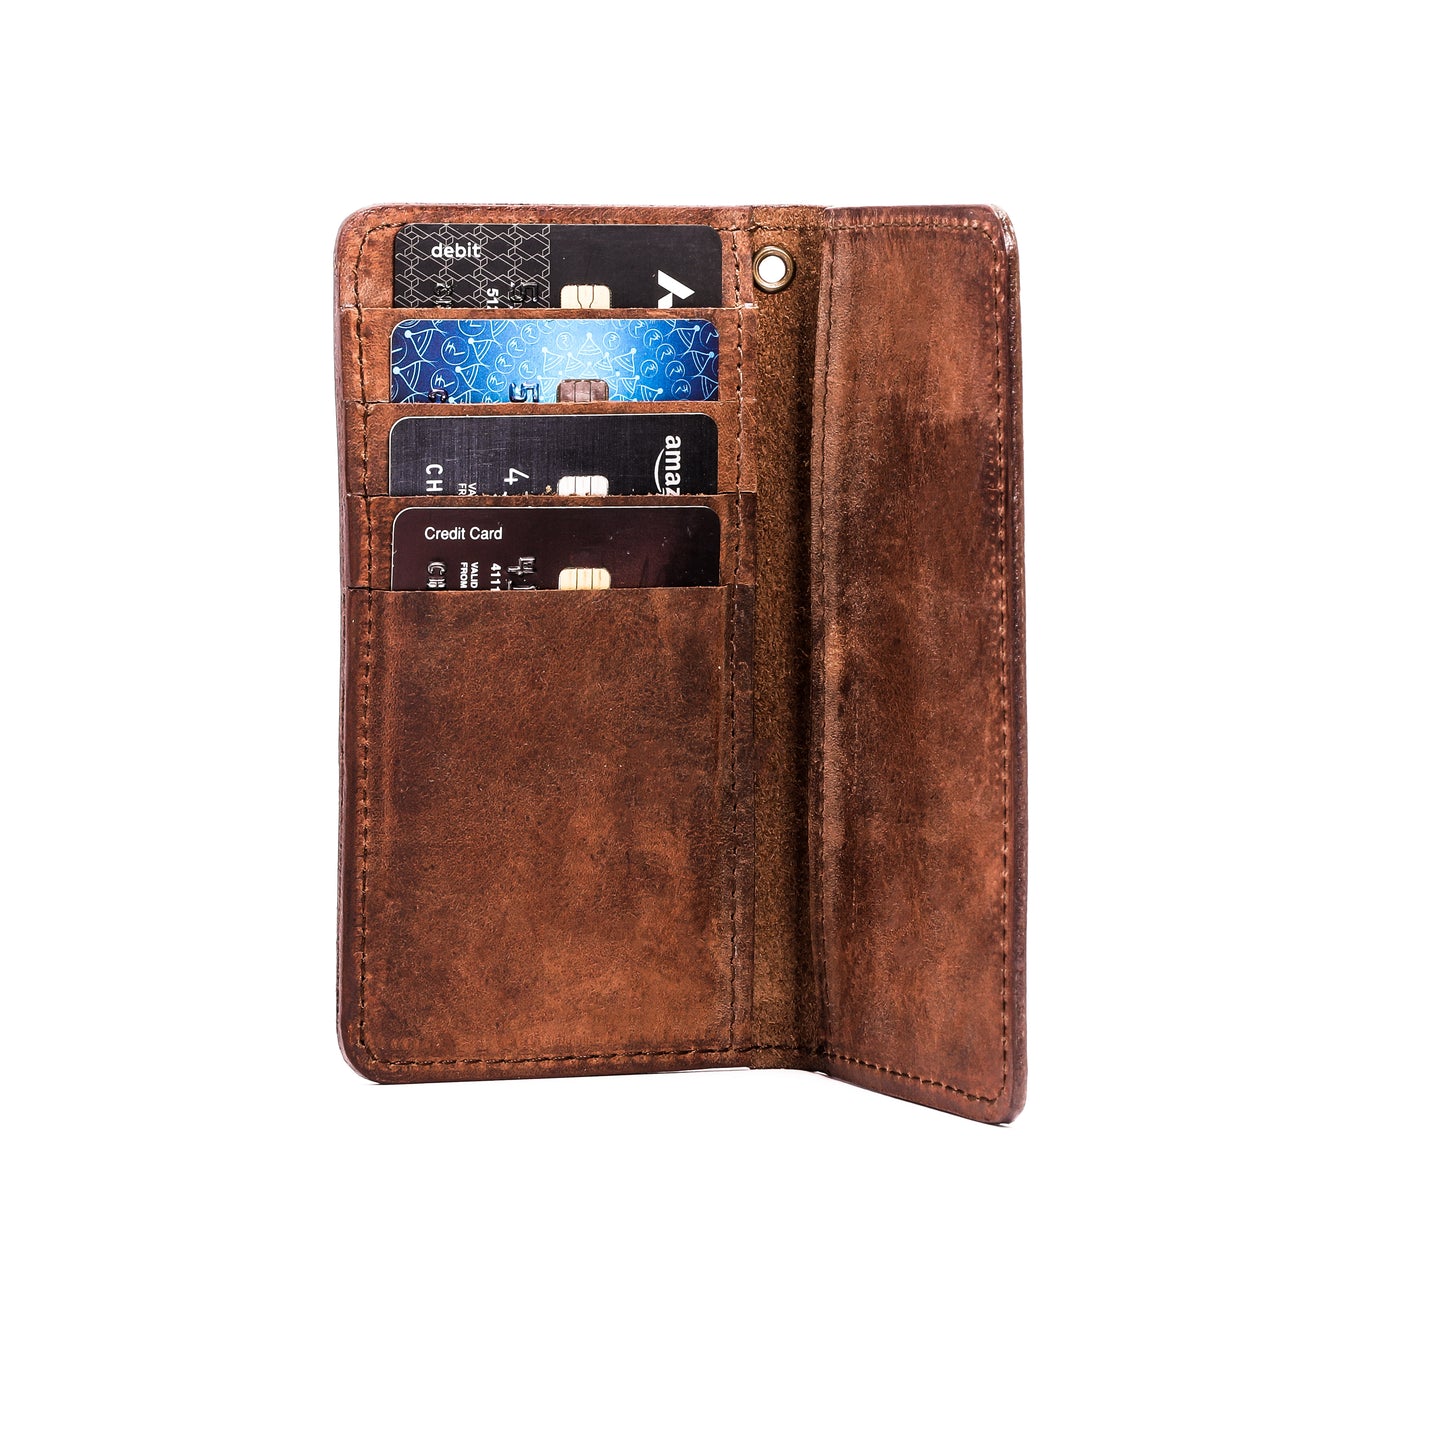 Flex - Leather Card wallet